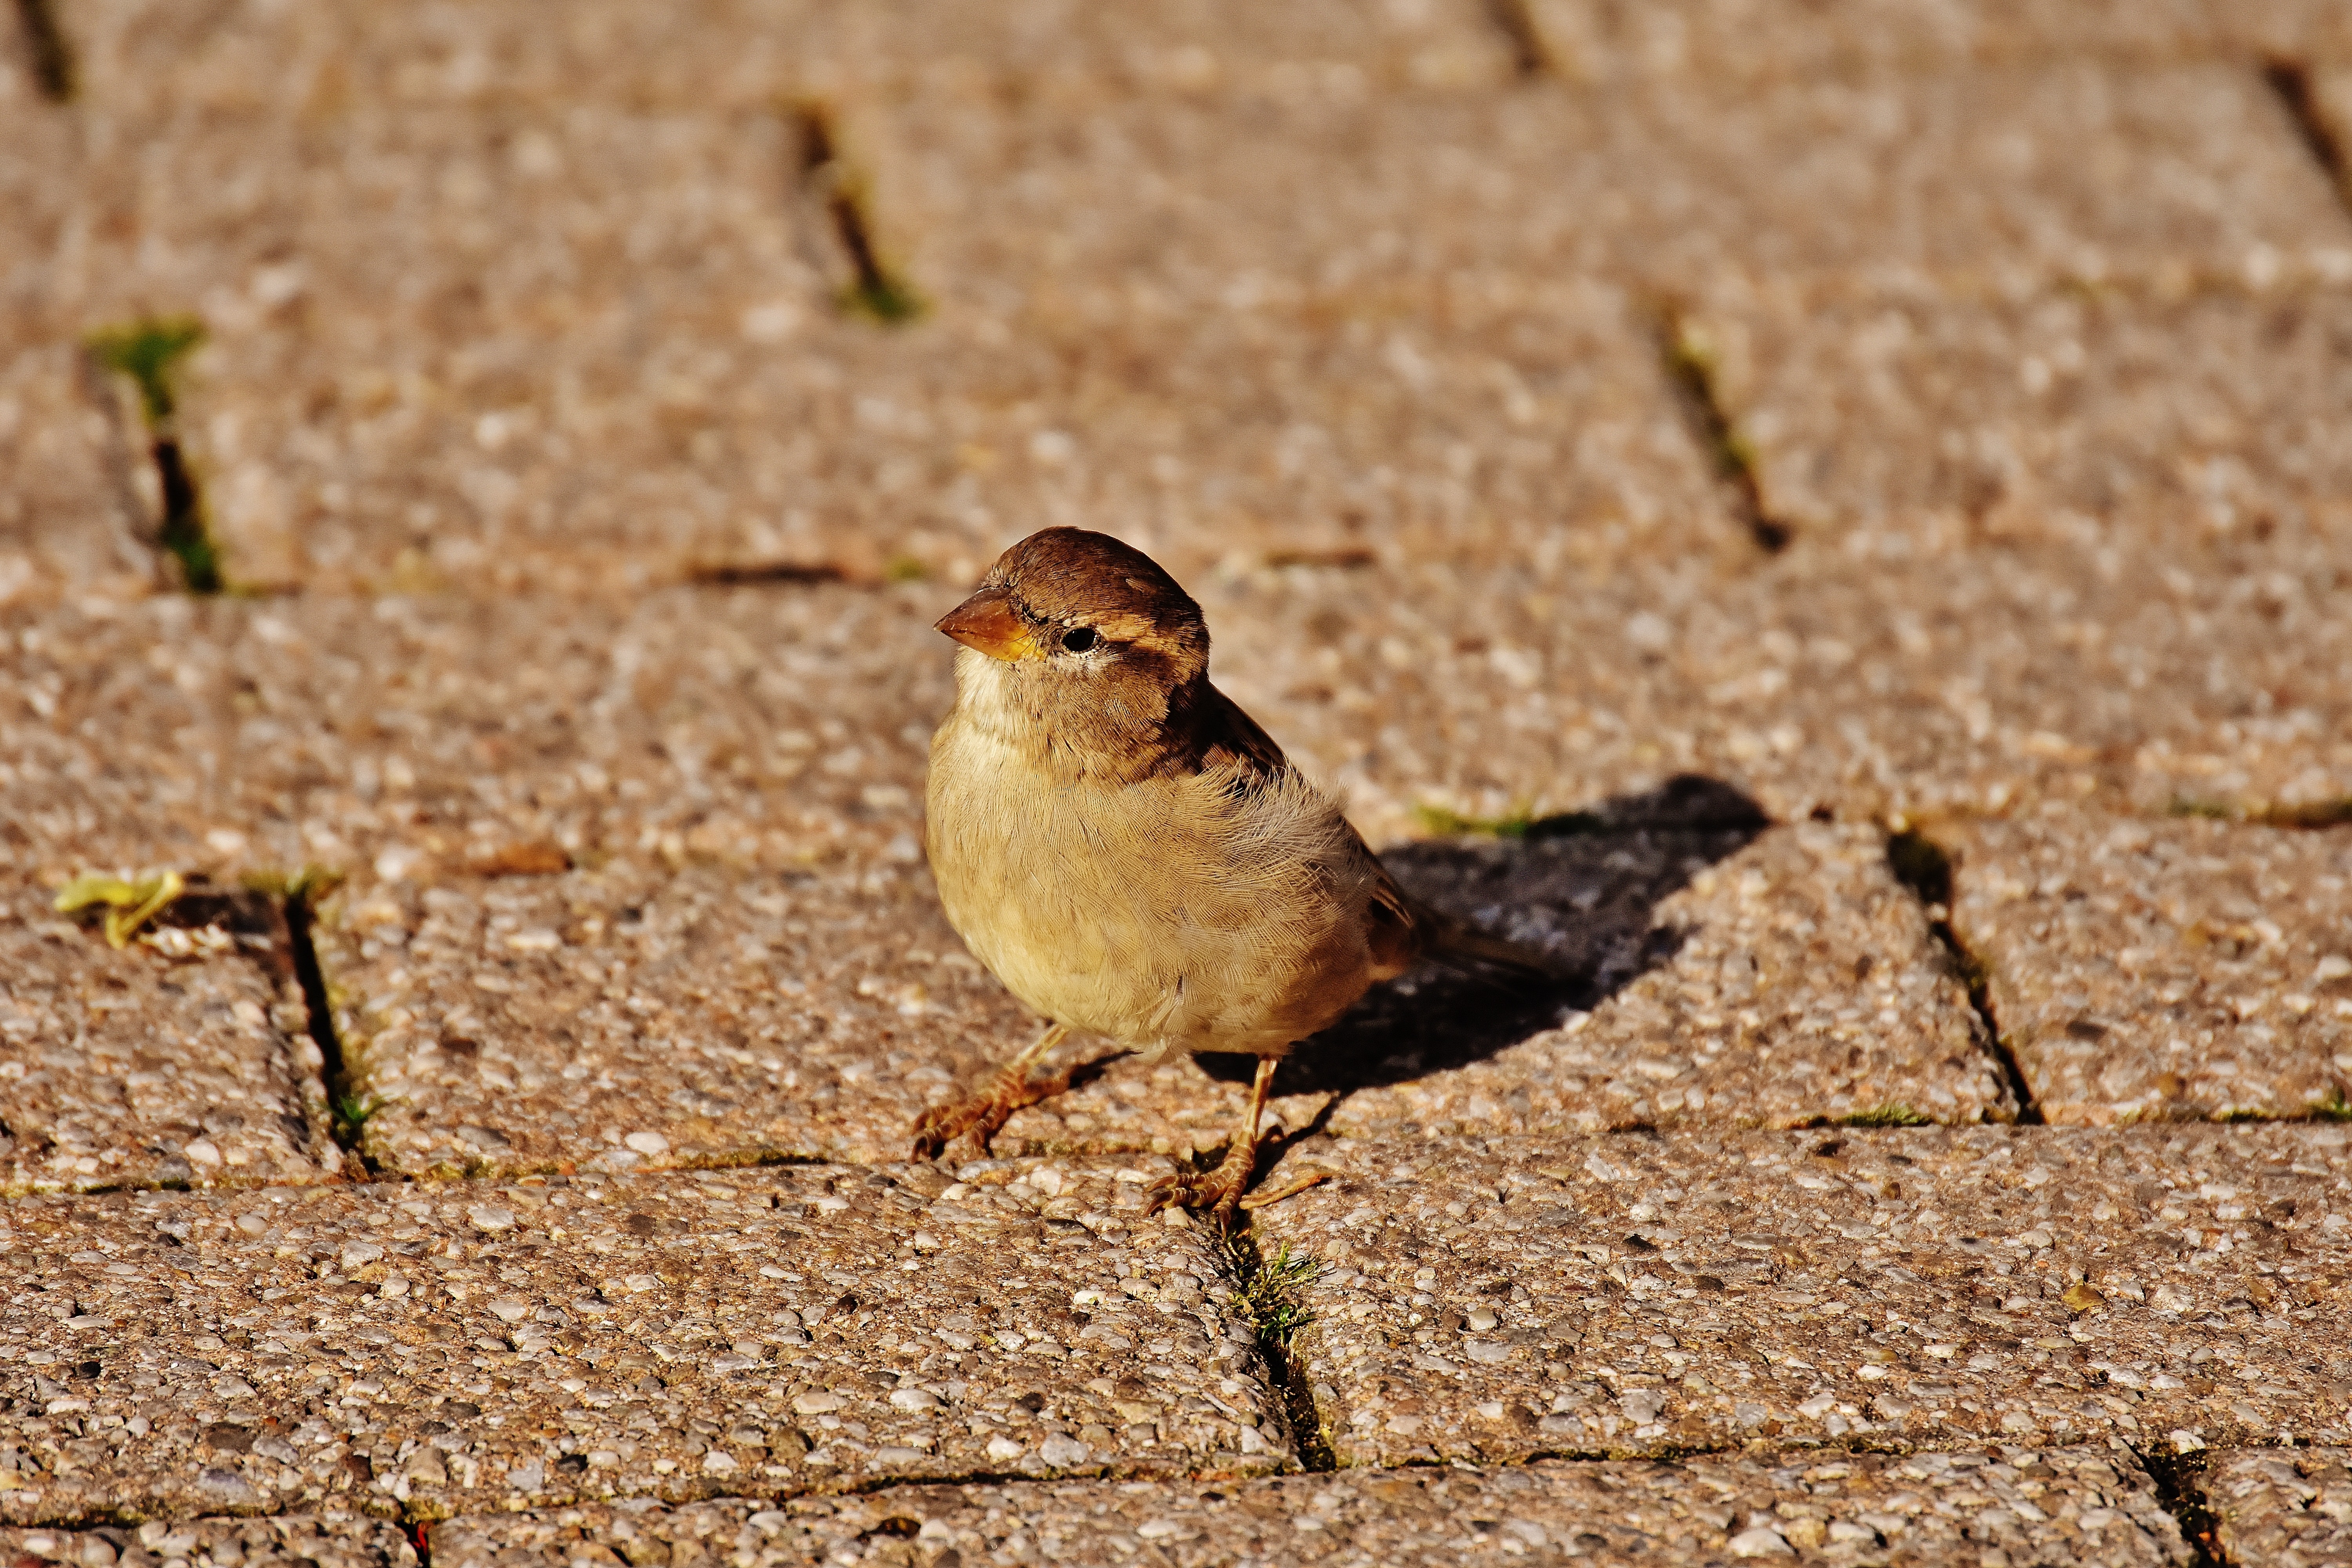 brown short beaked bird